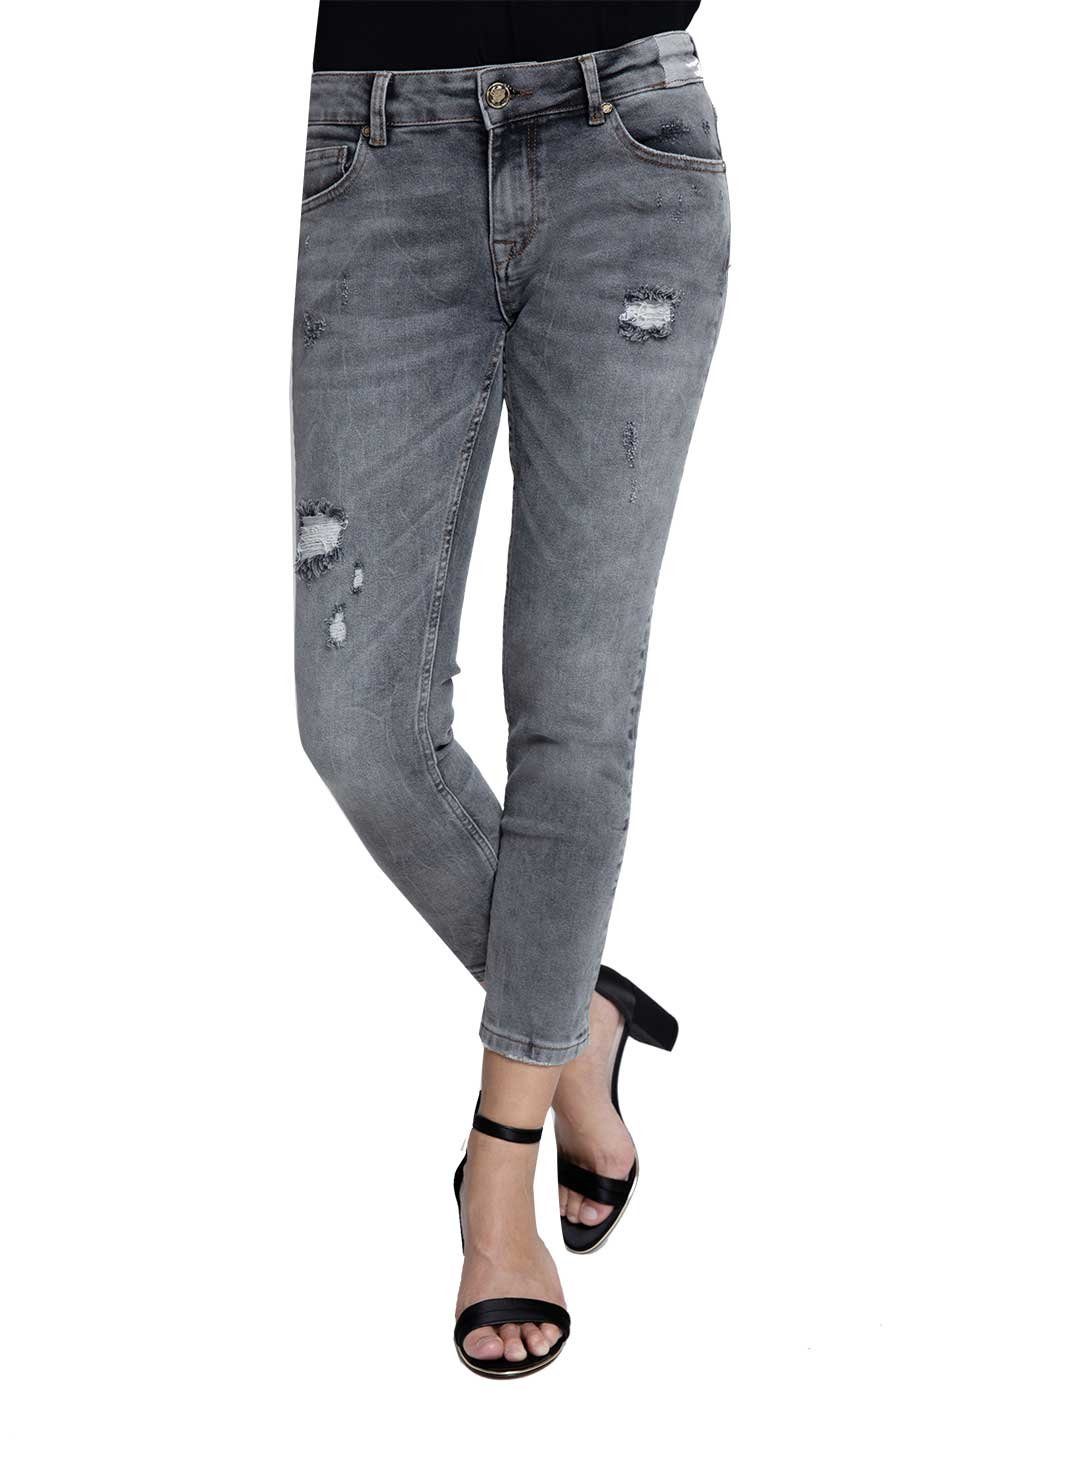 Zhrill 7/8-Jeans ANITA GREY Damen Momjeans 7/8 Cropped 5 Pocket Vintage Slim Fit Anita